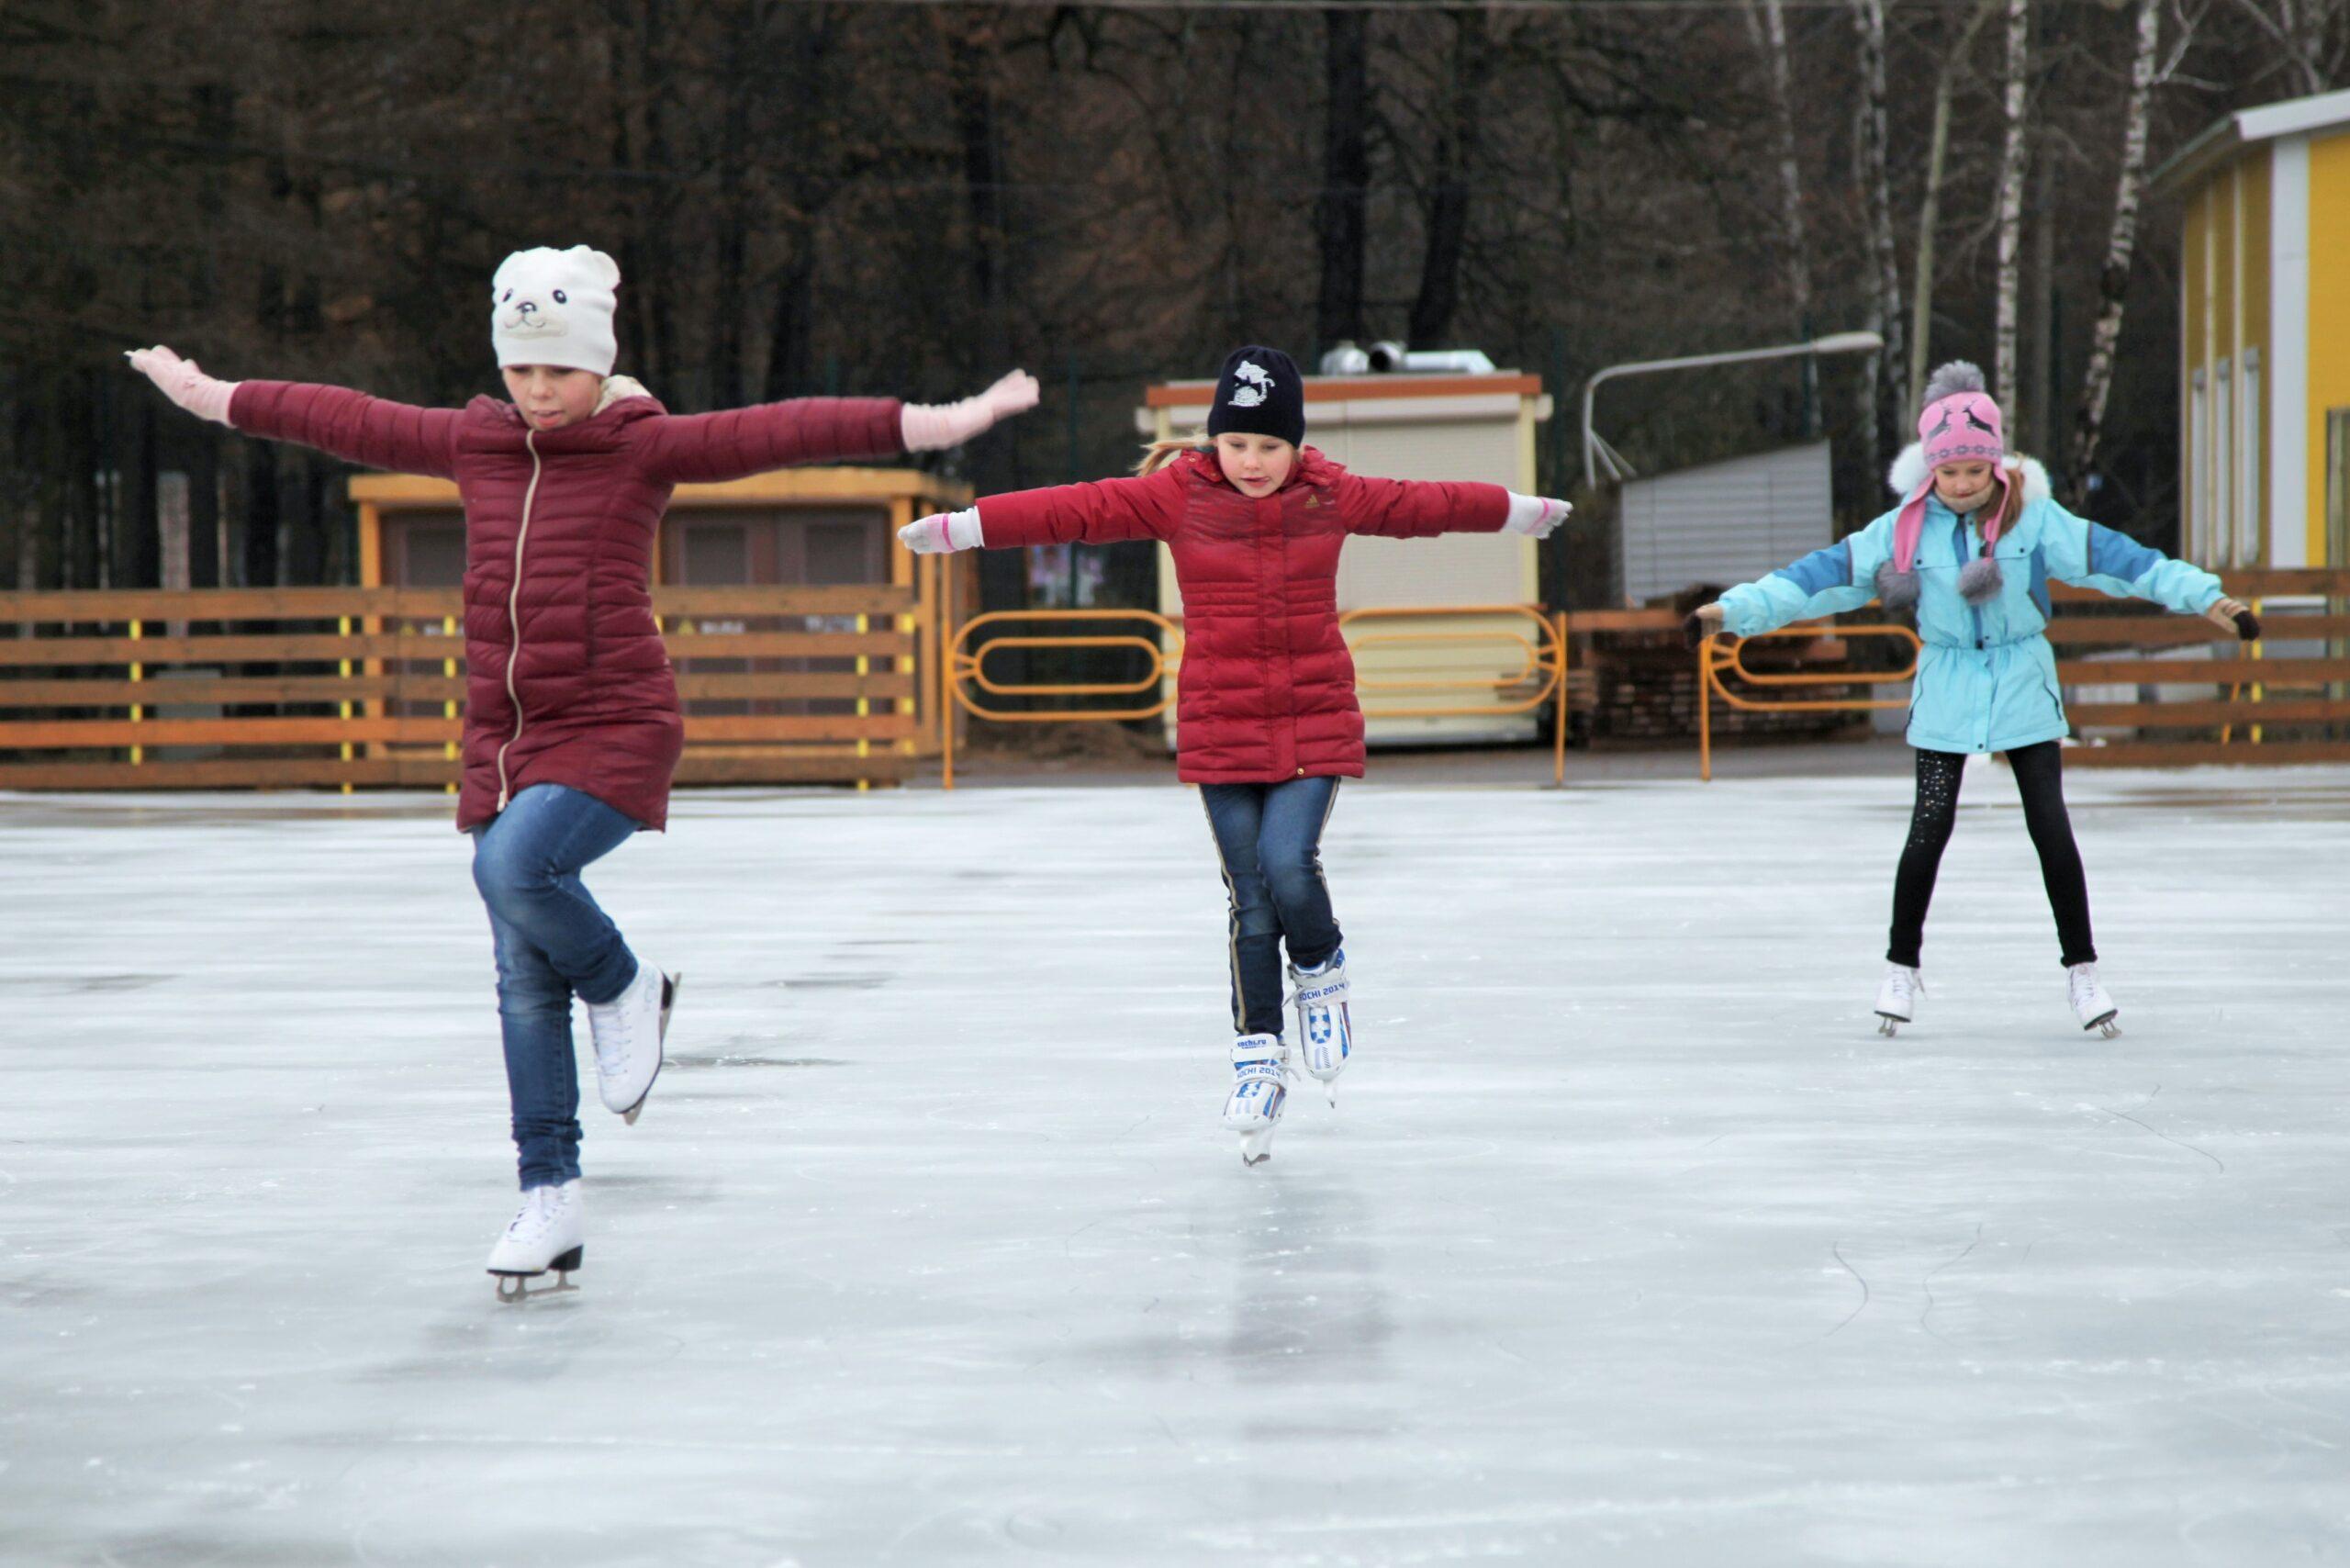 Катание на коньках. Дети на катке. Каток для катания на коньках. Кататься на льду.